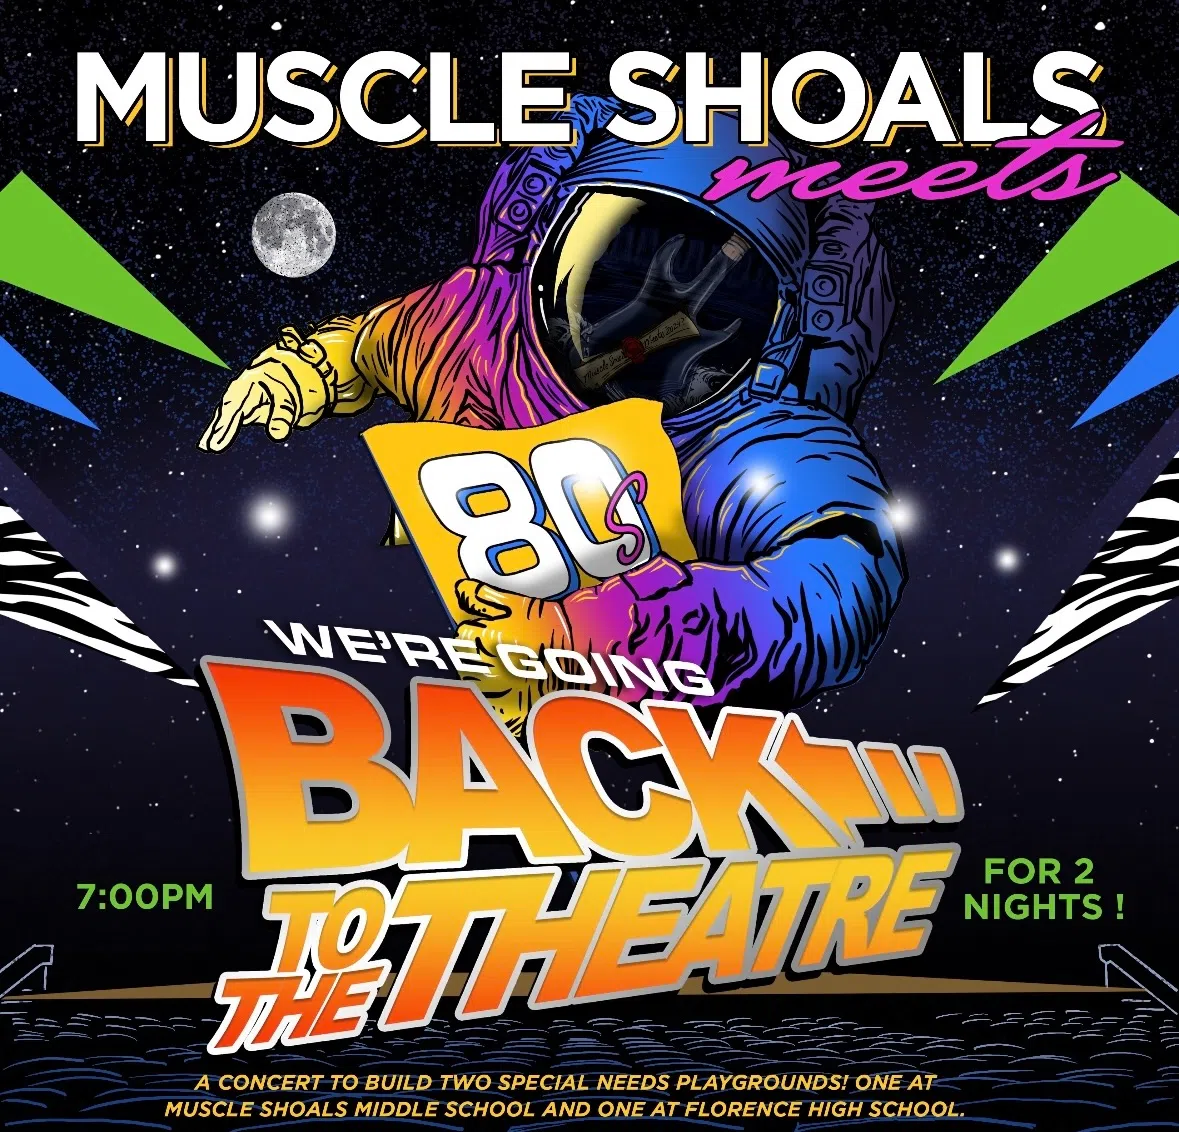 Feature: https://www.wqlt.com/muscle-shoals-meets-the-80s/